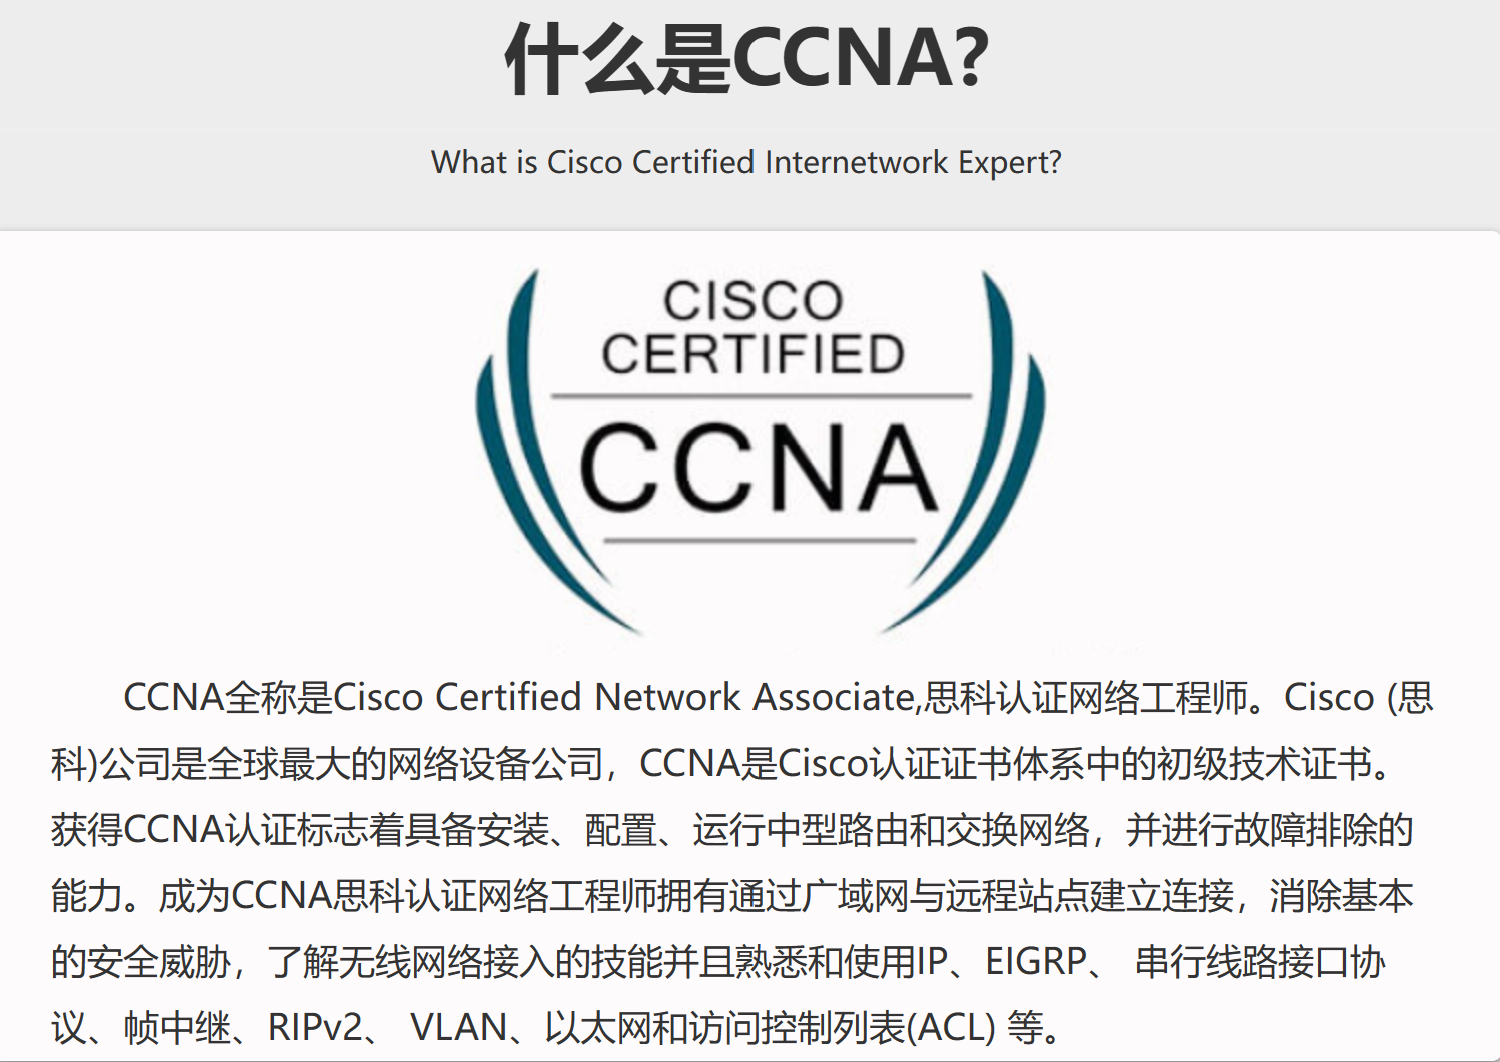 CCNA EI 思科认证网络助理工程师